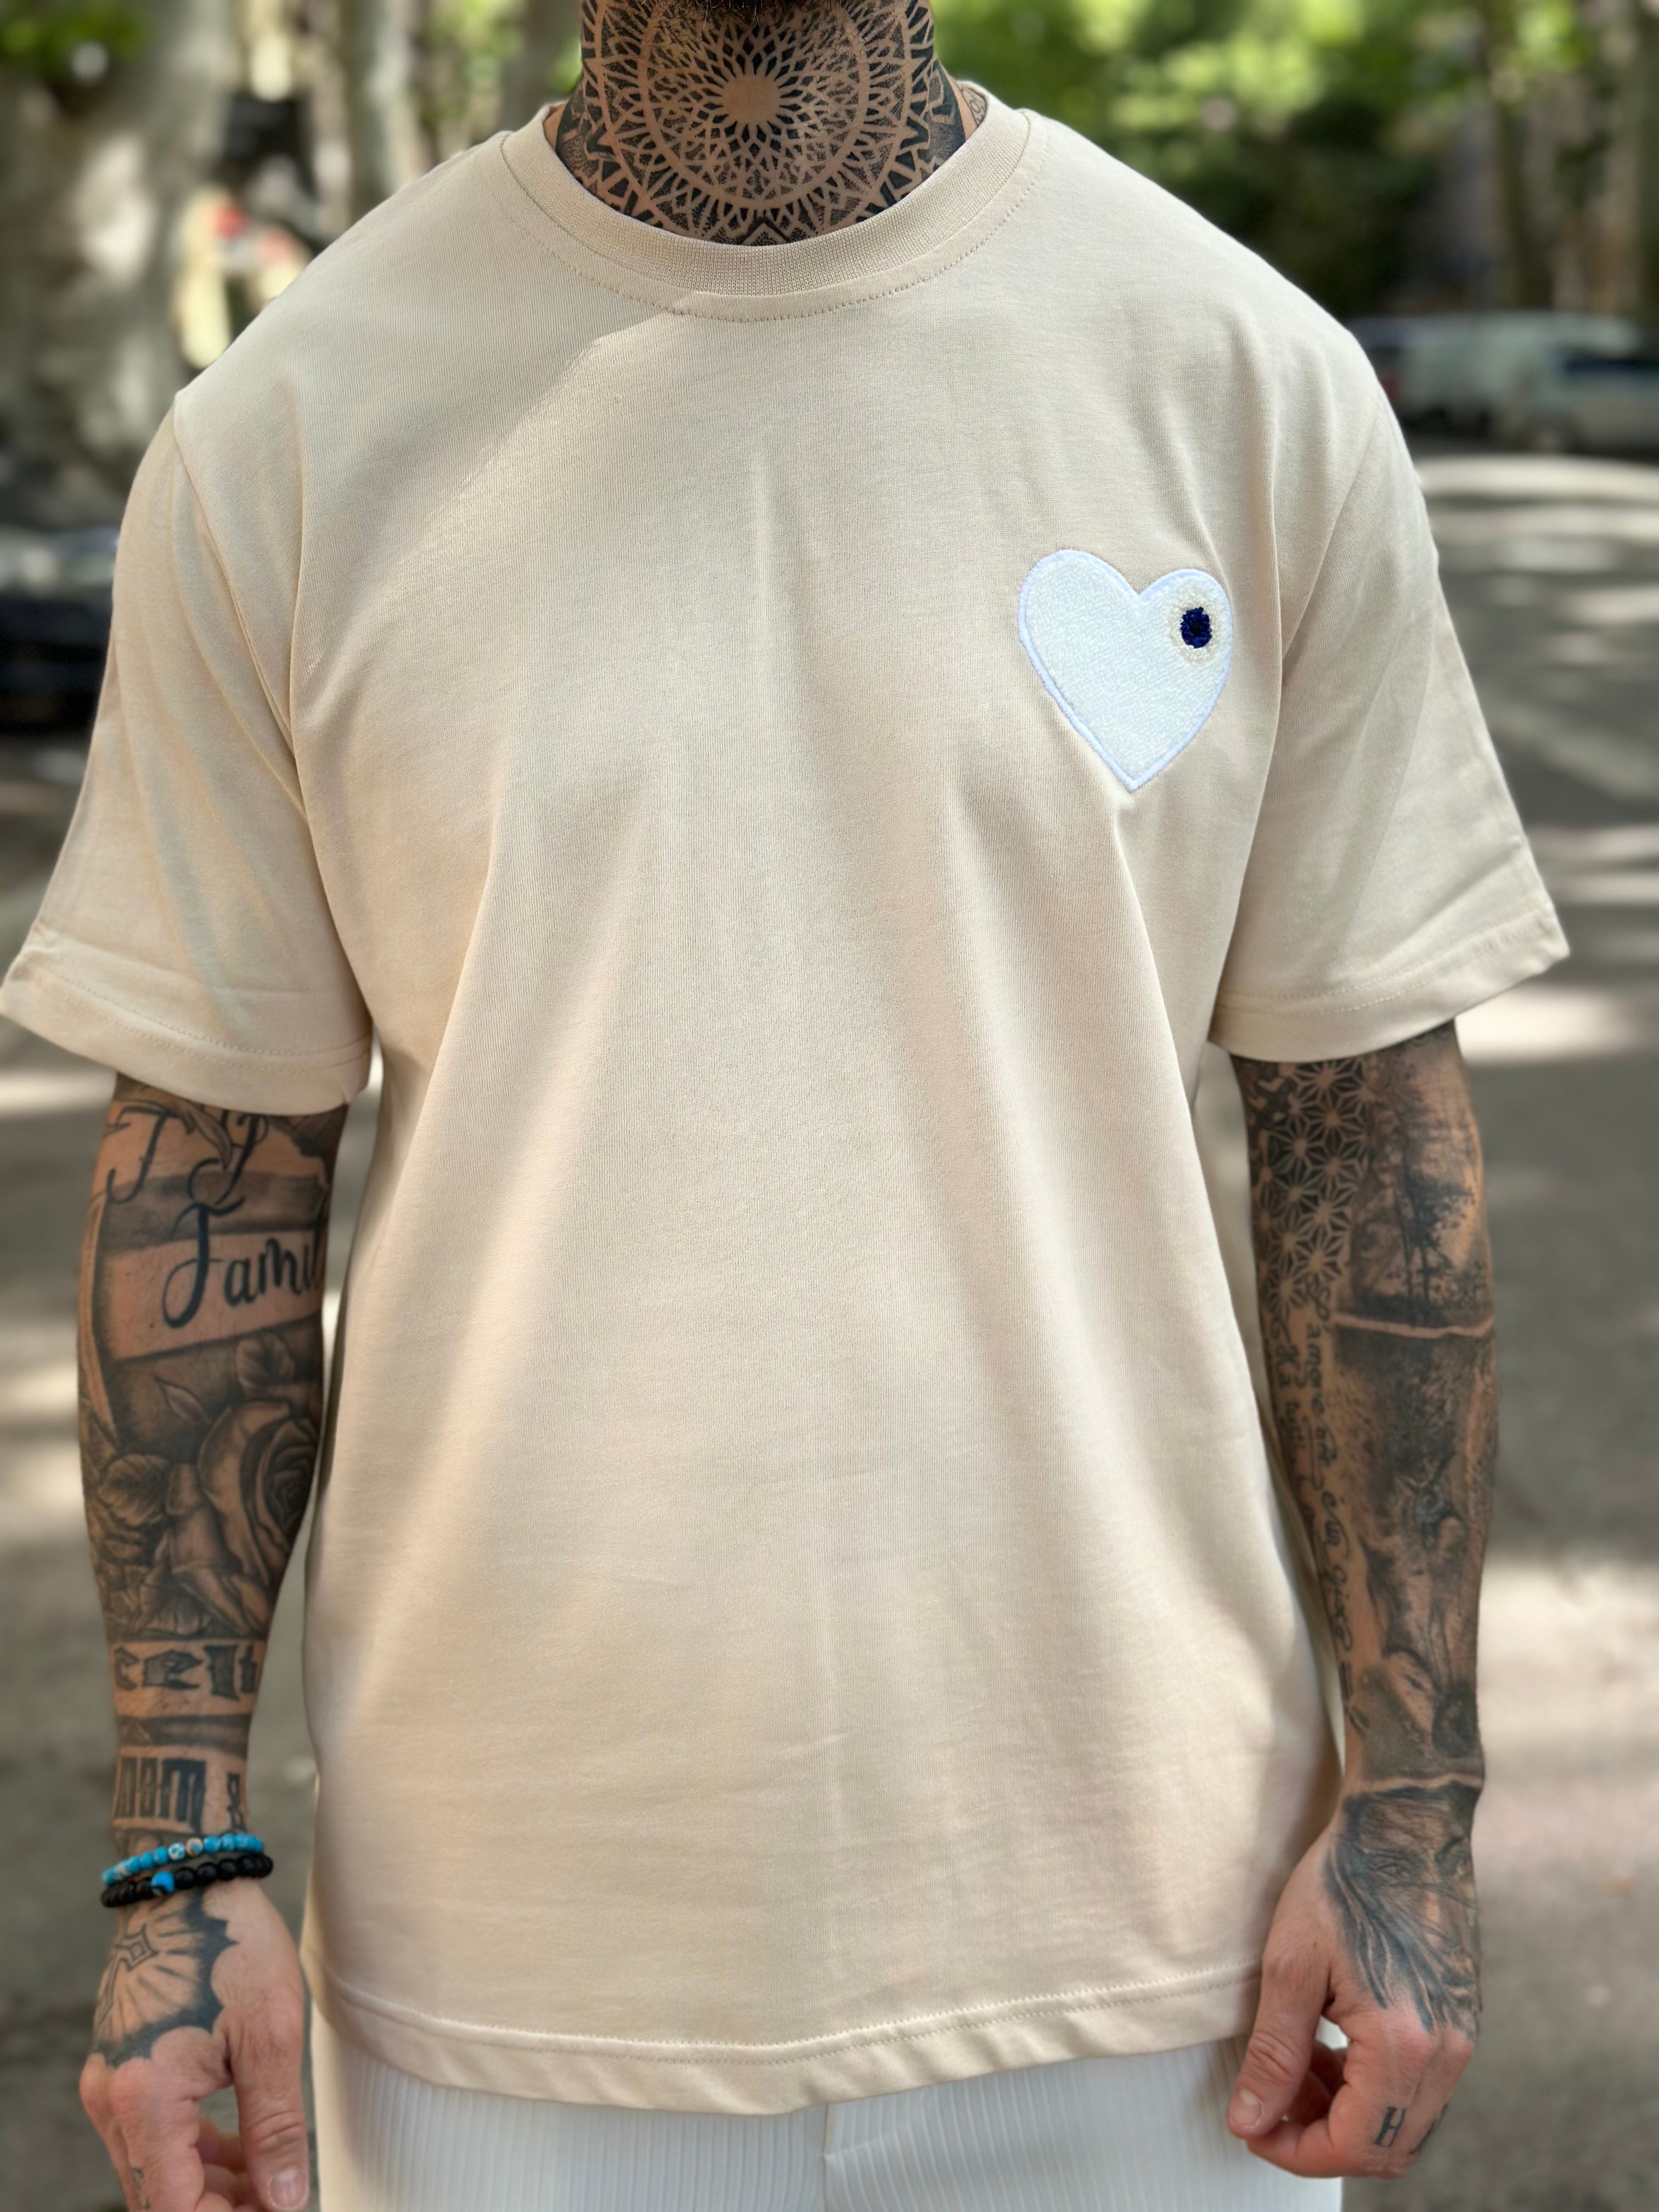 ADJ - T-shirt Beige coeur Blanc